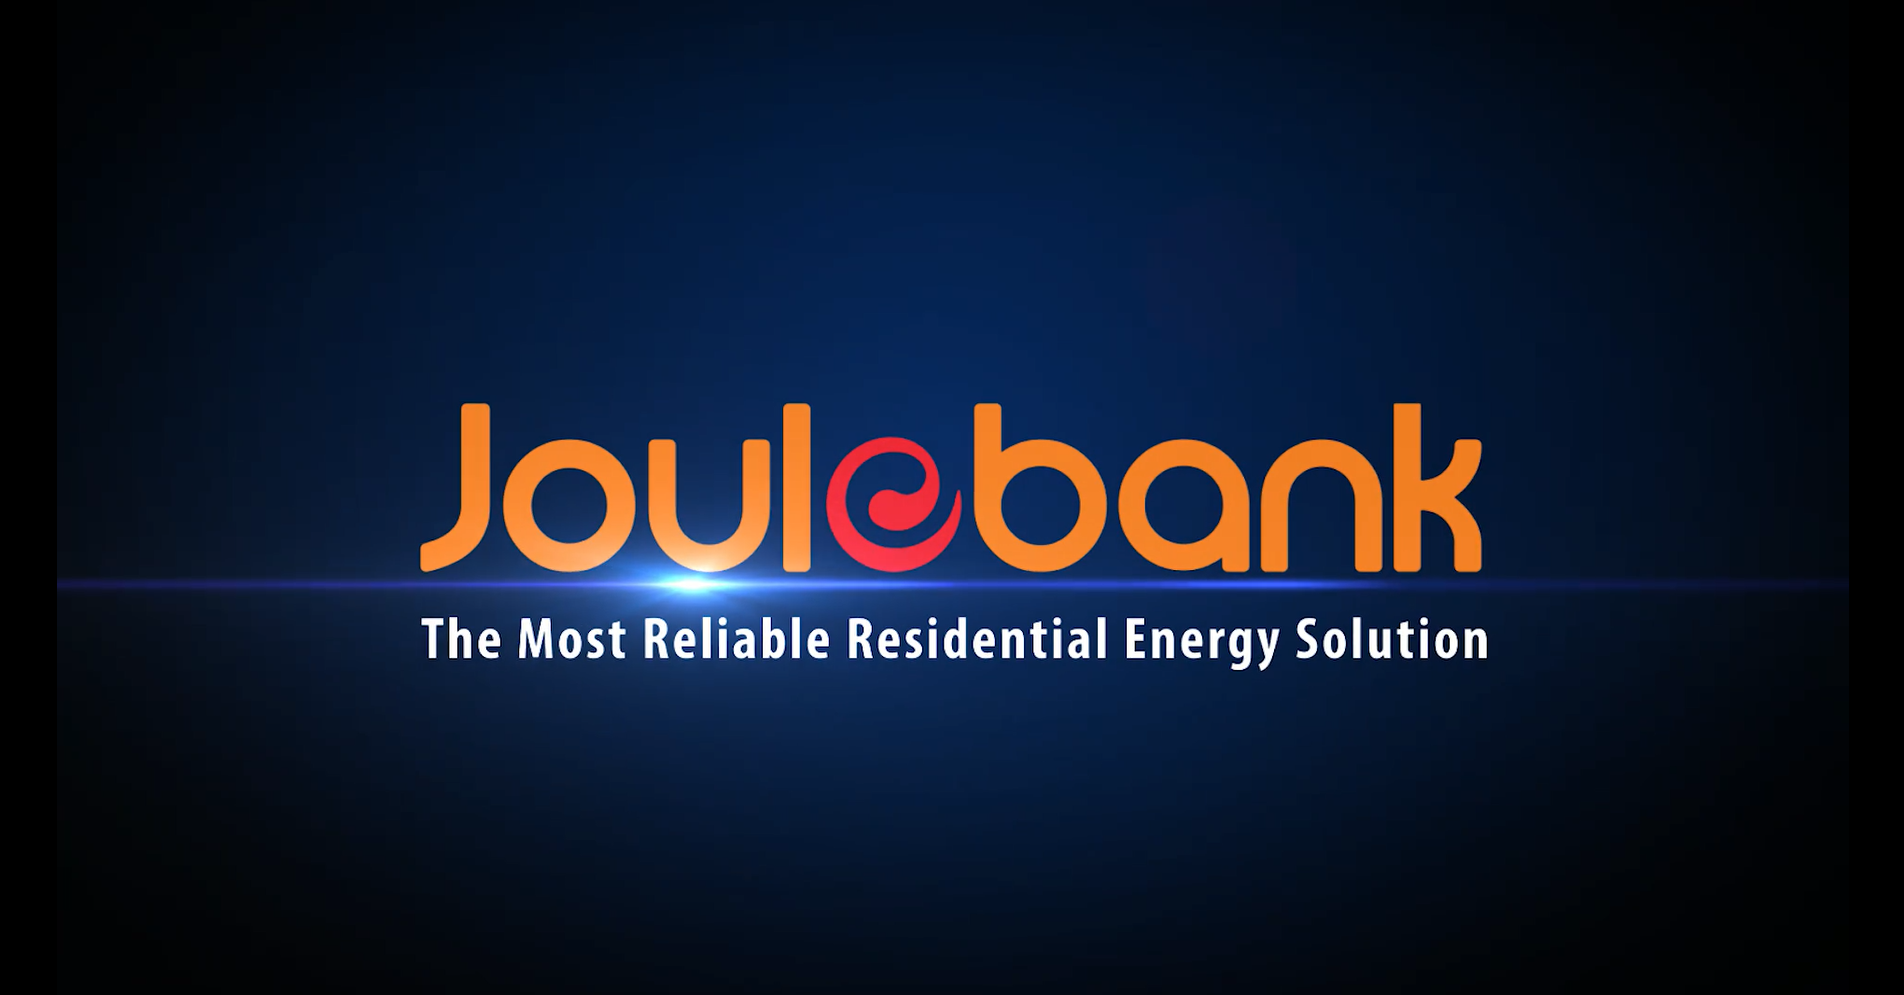 Joulebank- Brand Introduction Vedio